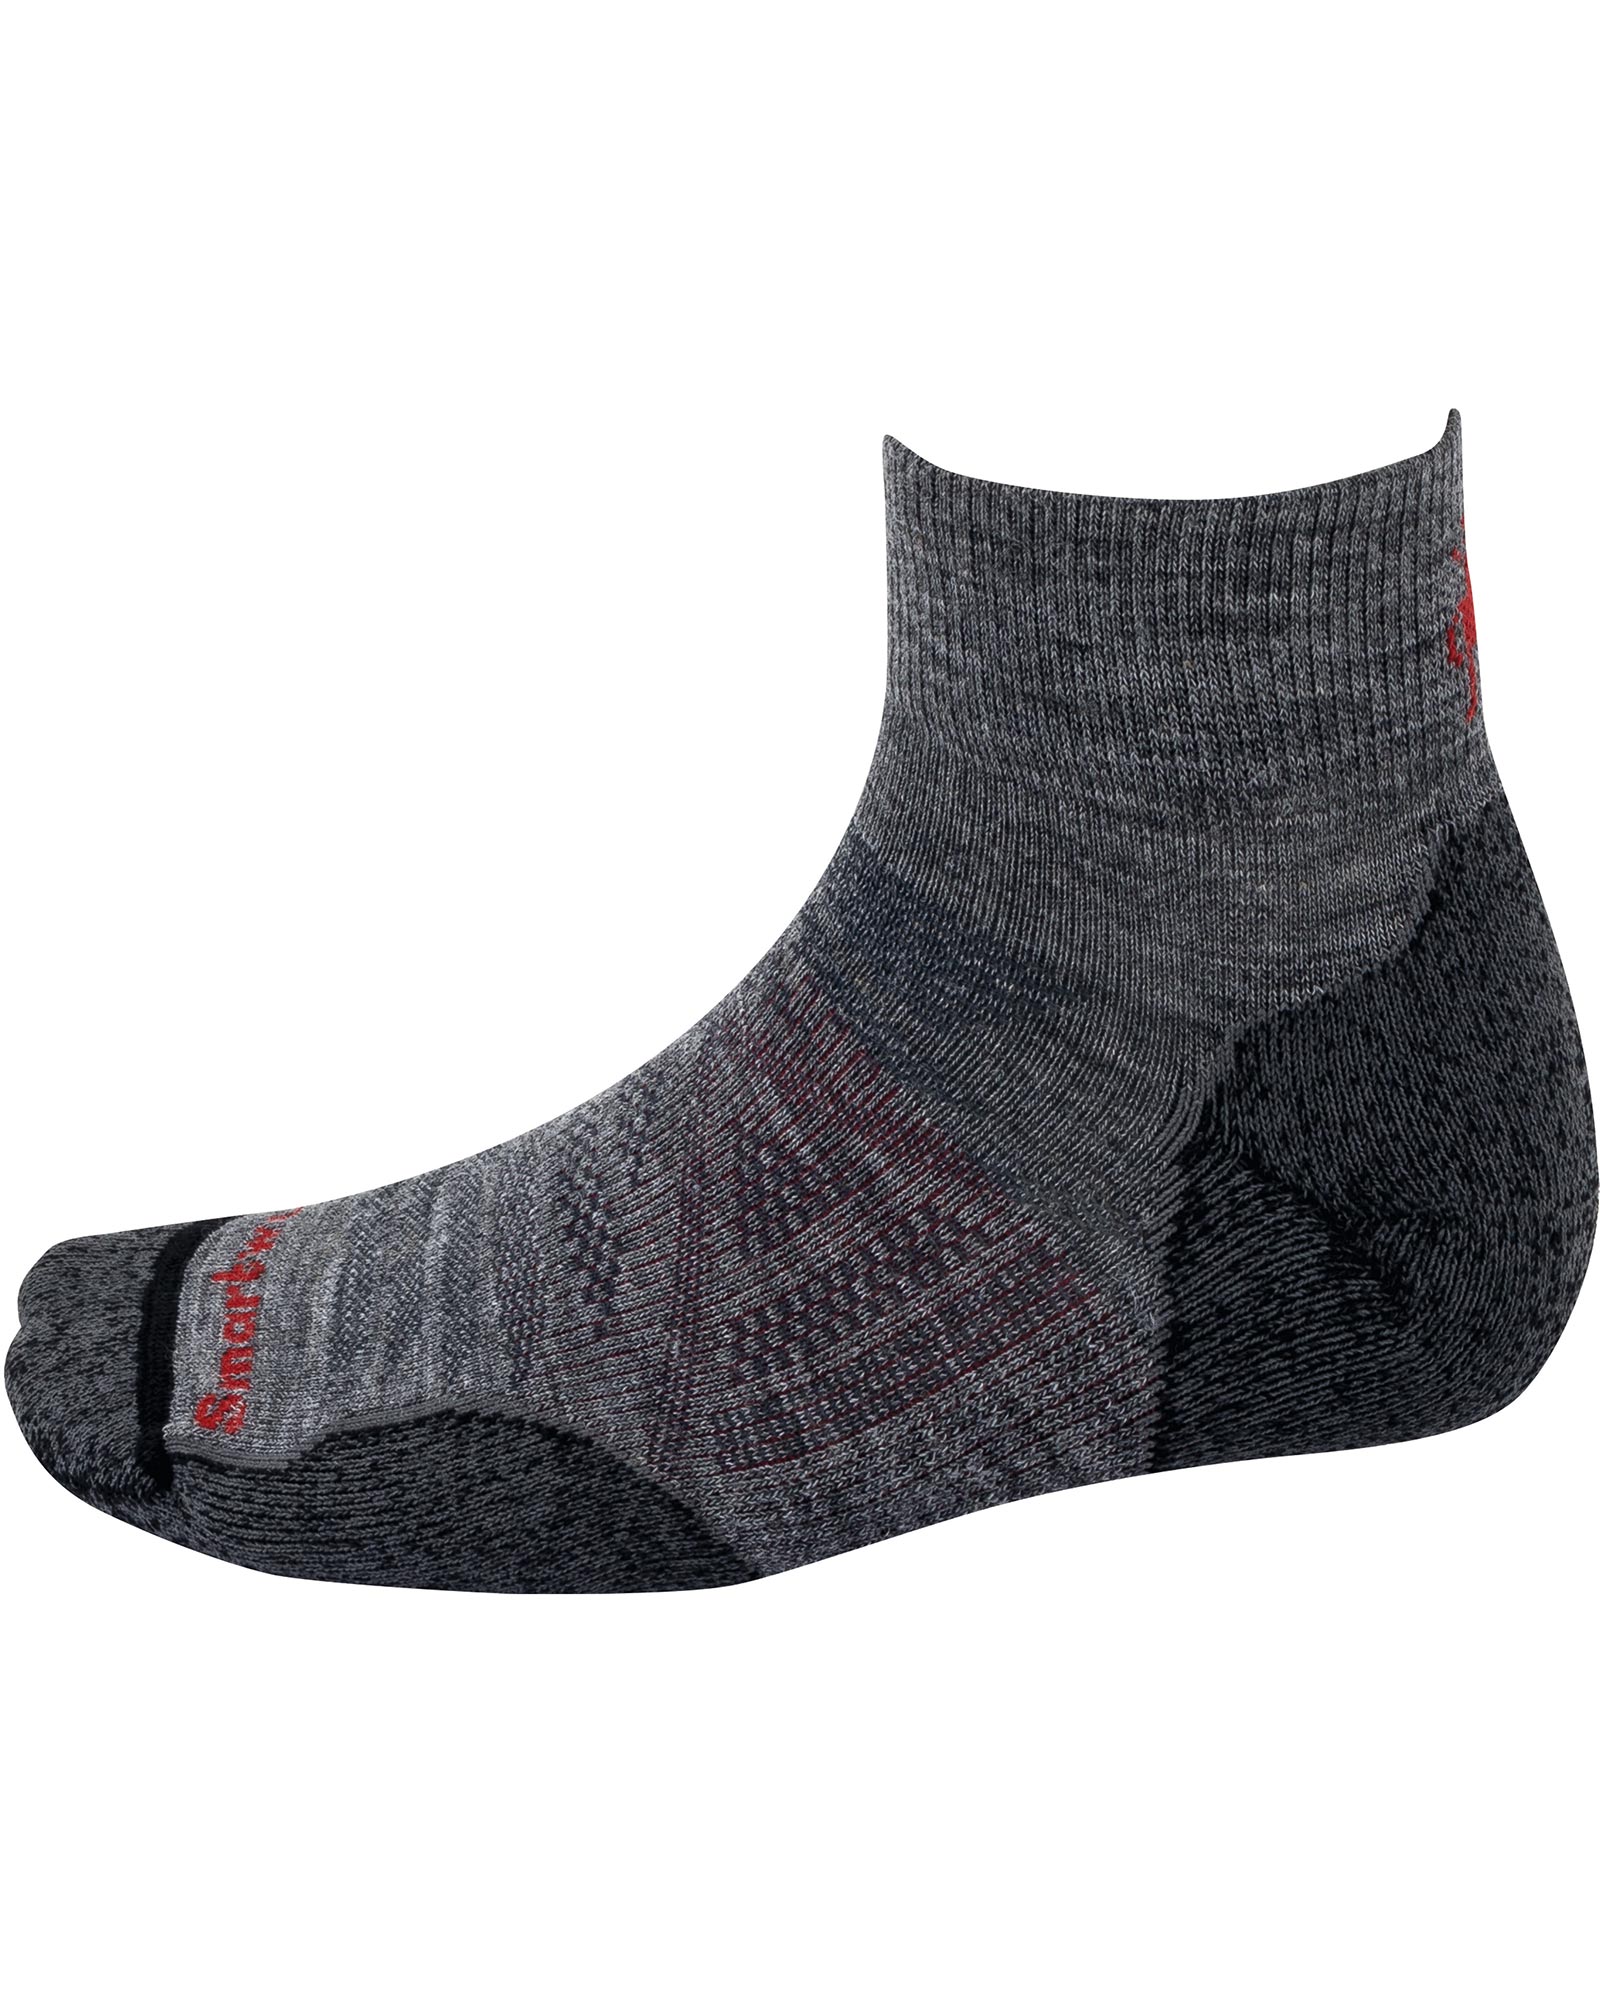 Product image of Smartwool PhD Outdoor Light Mini Socks